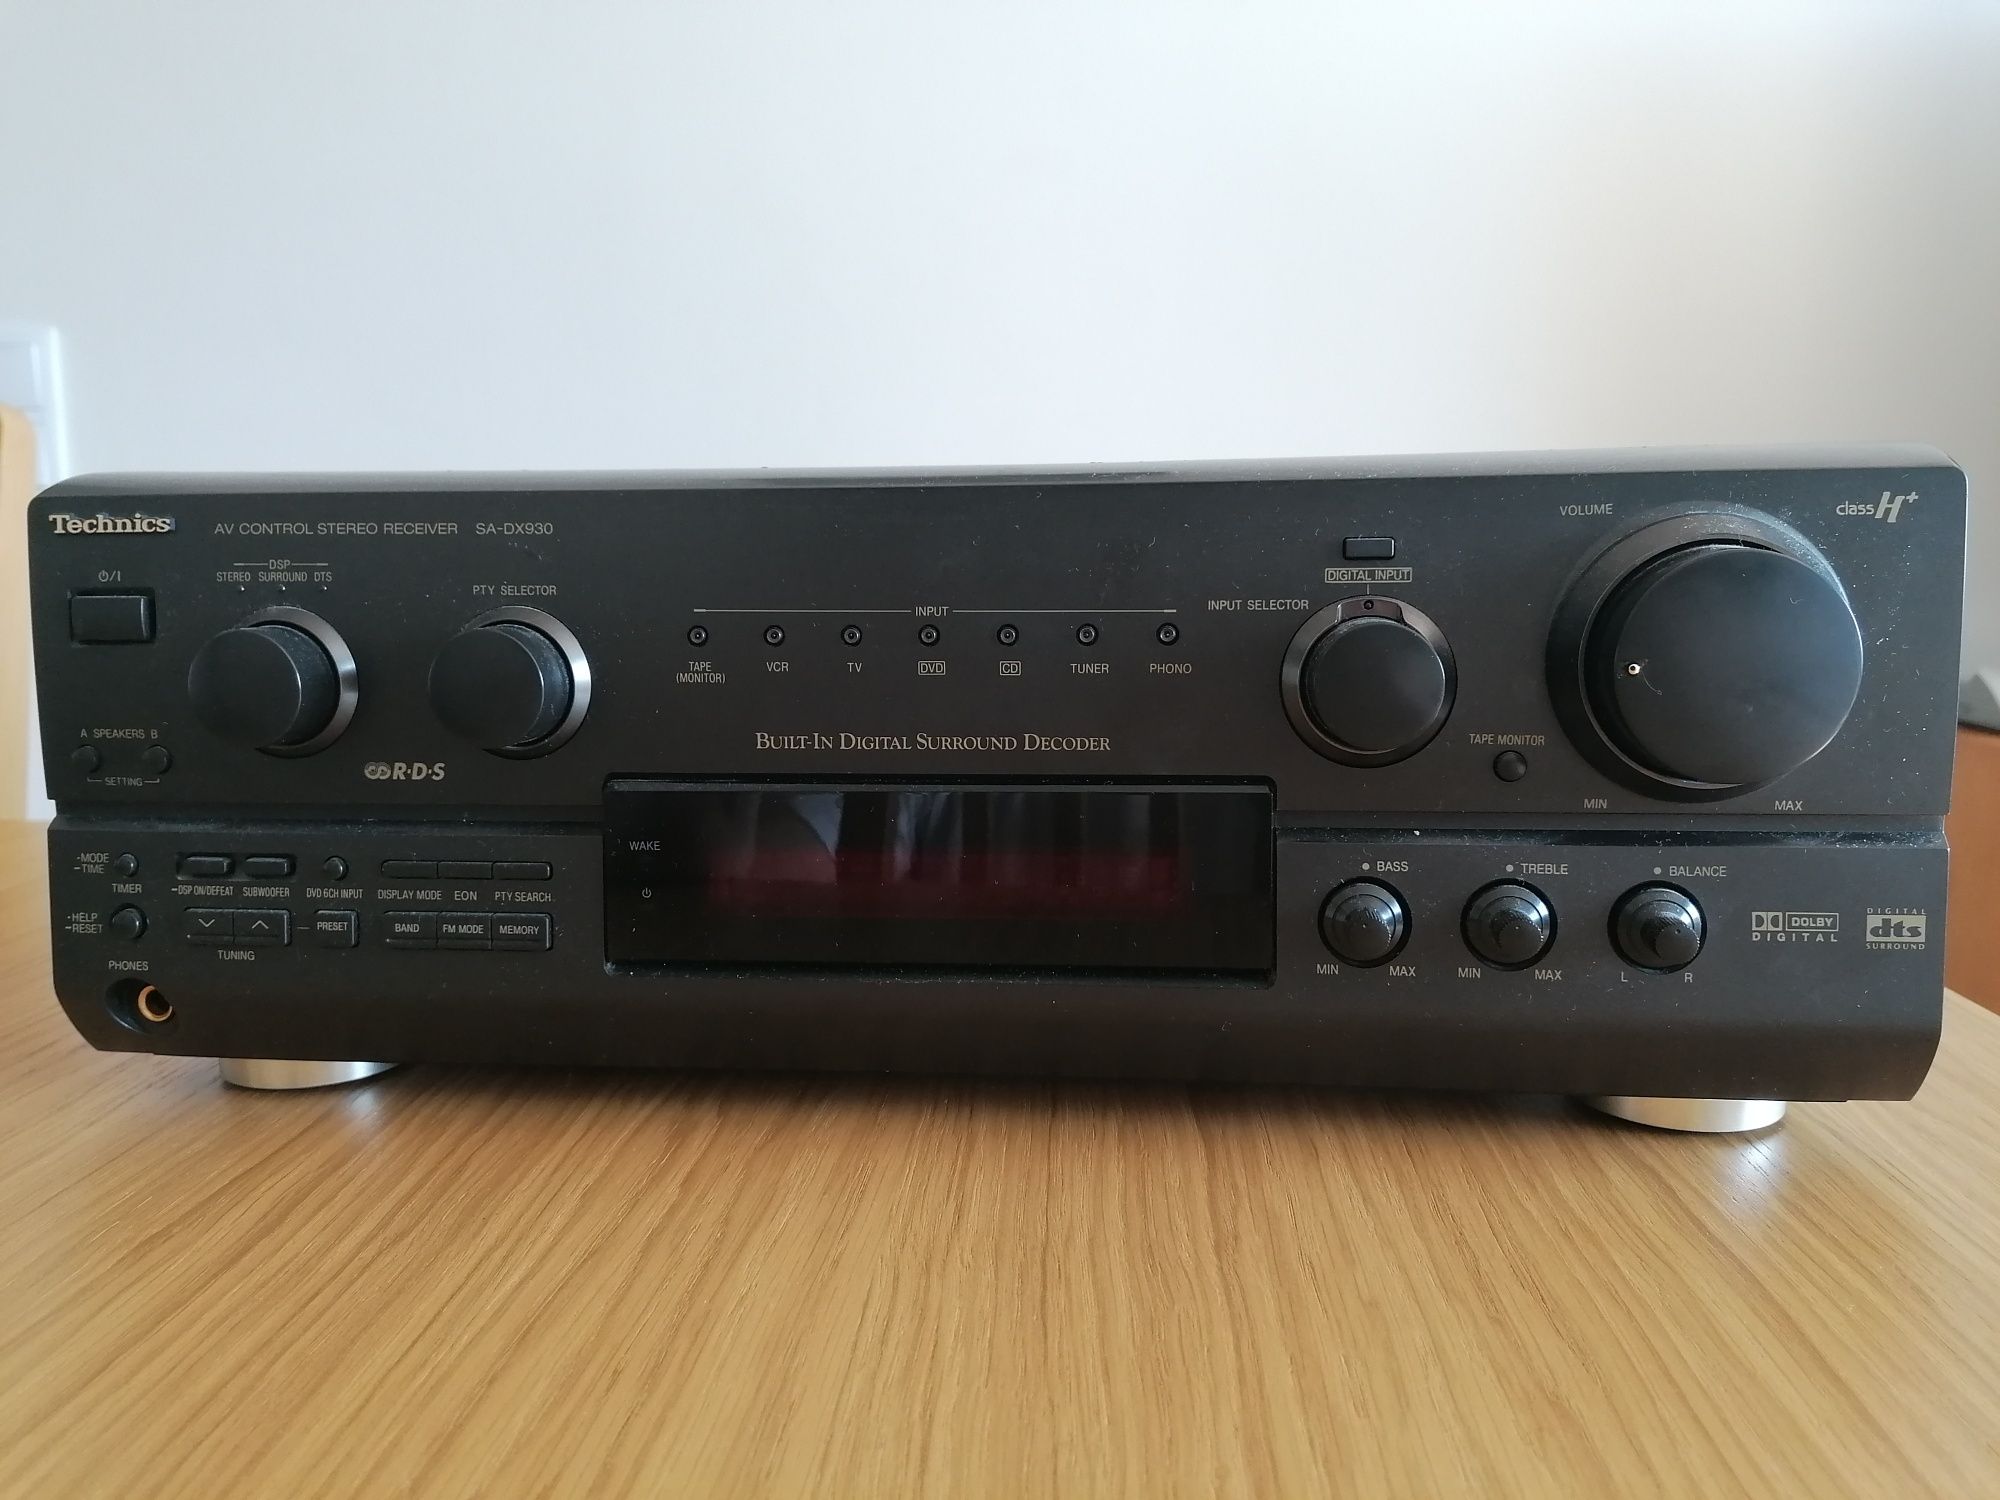 Amplificador Technics SA DX-930 AV Control stereo receiver